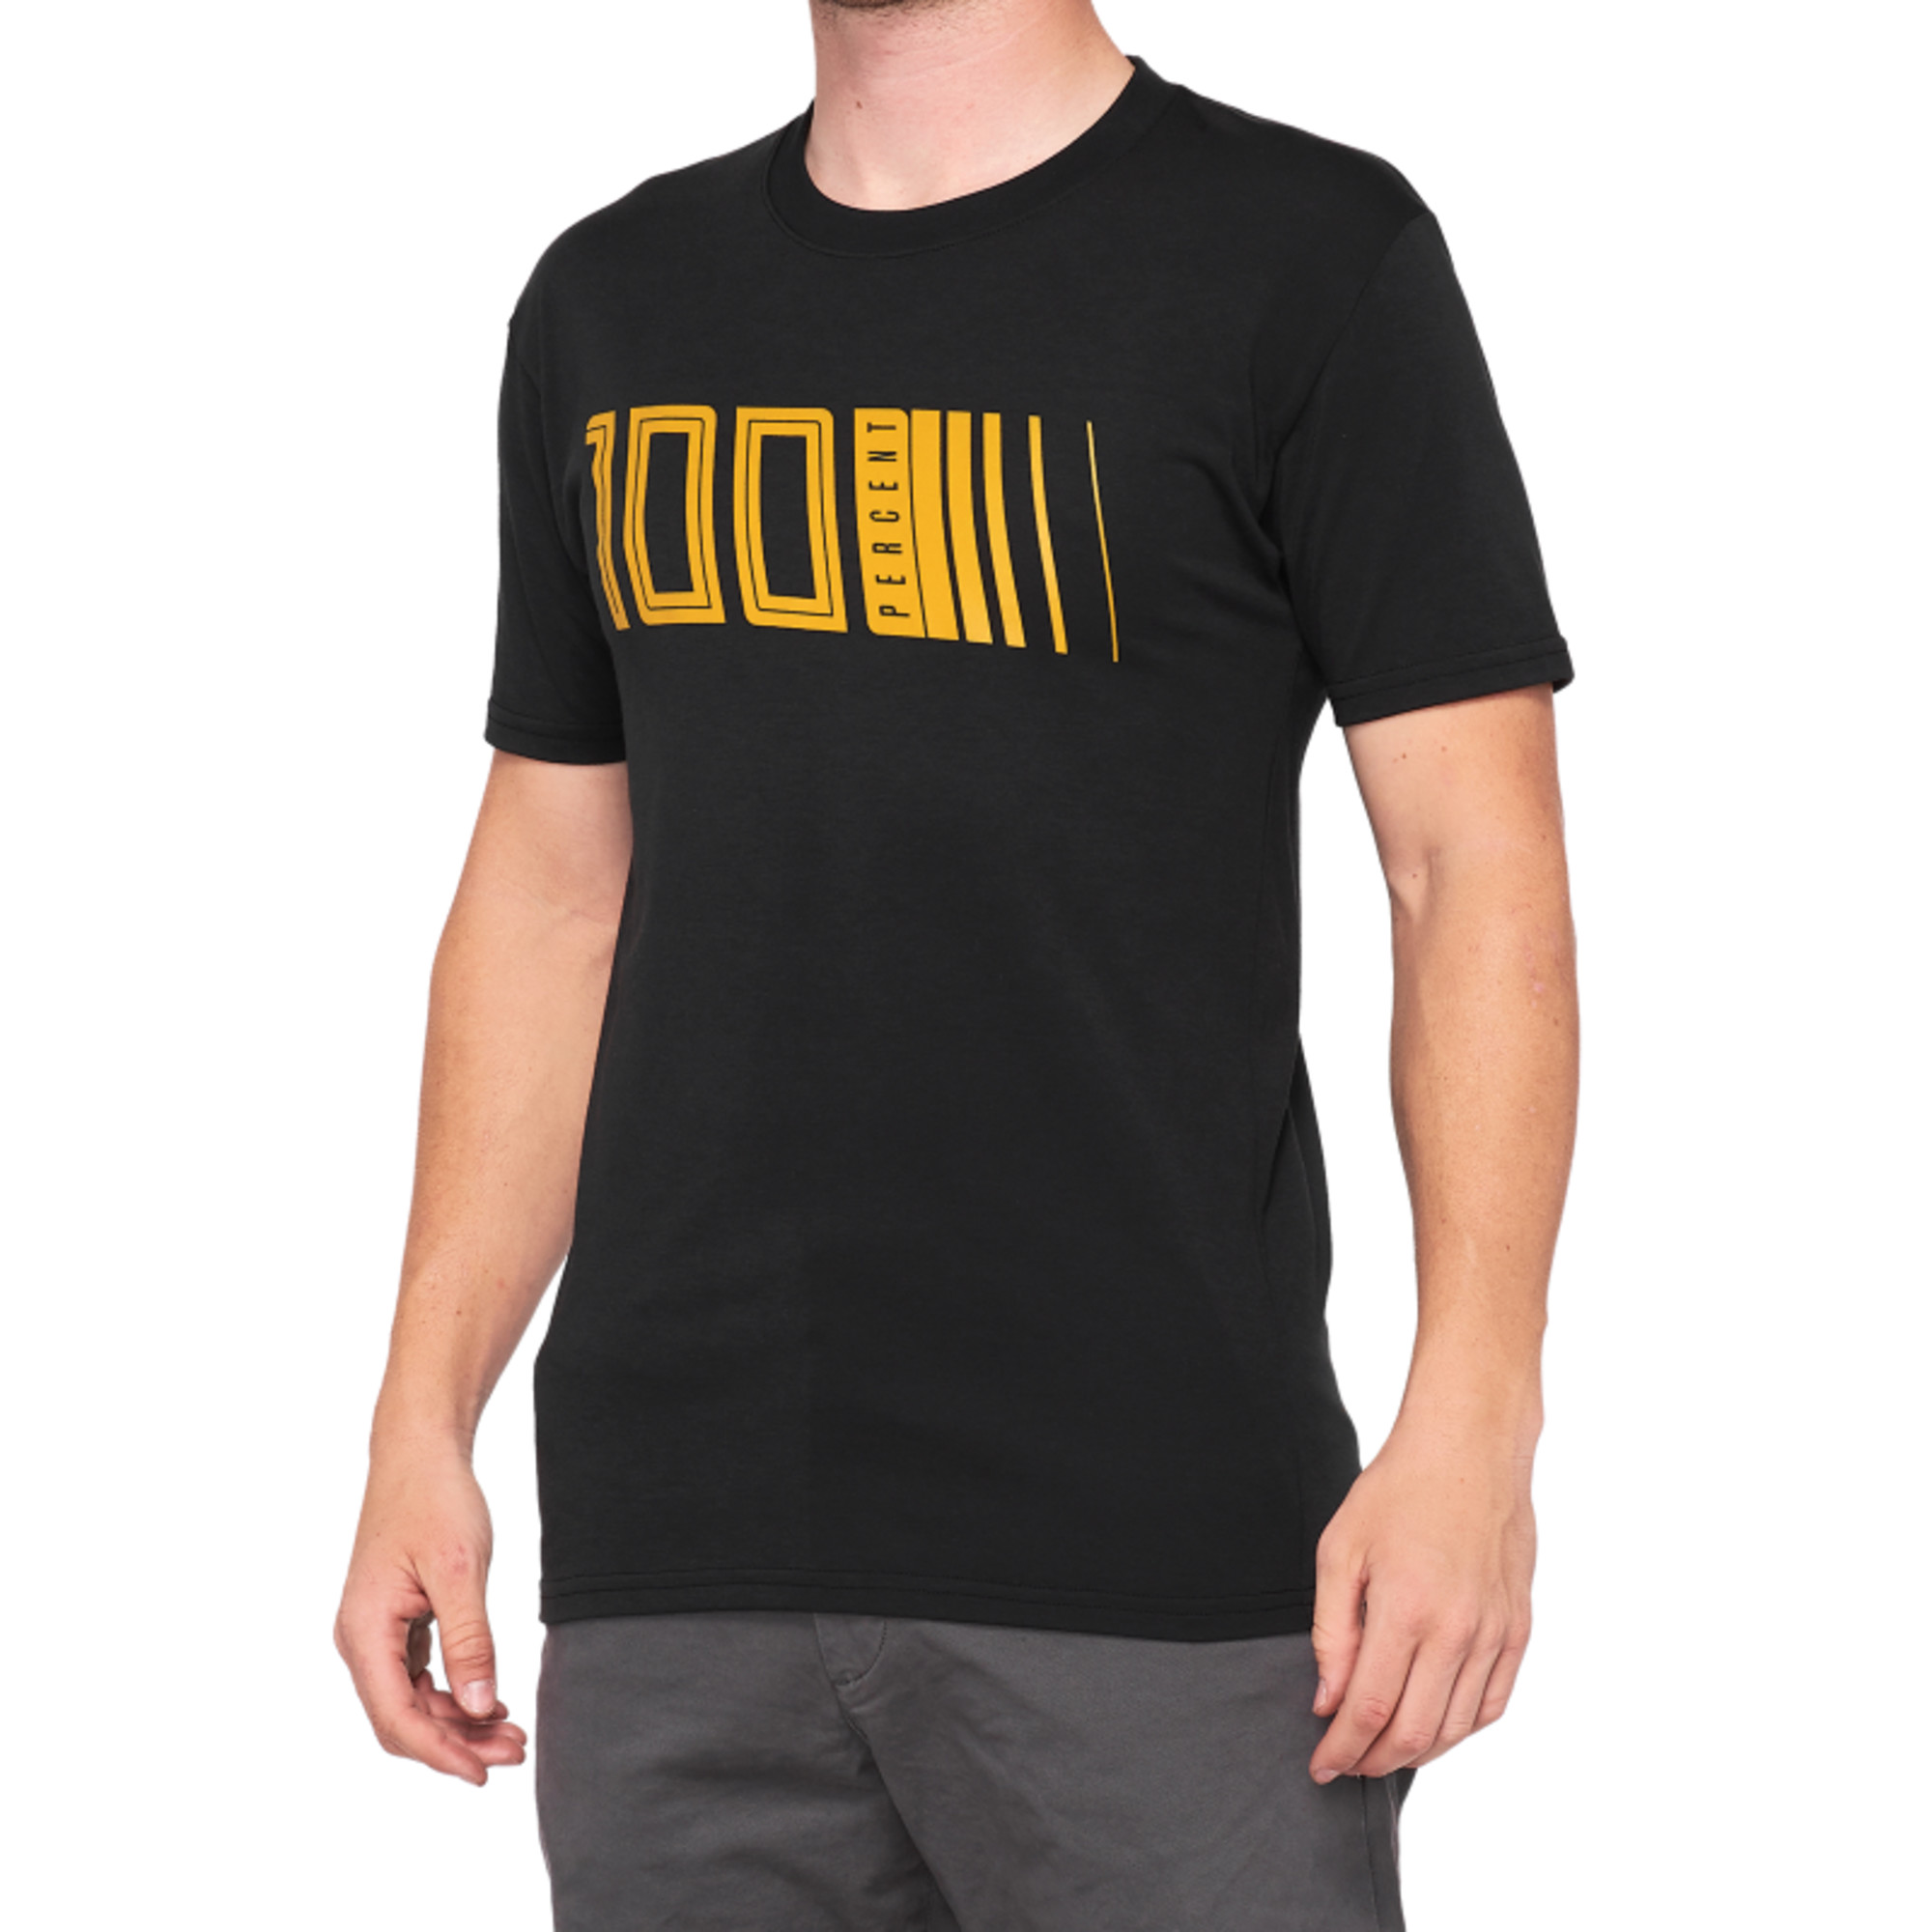 100 percent t-shirt shirts for men pulse tech